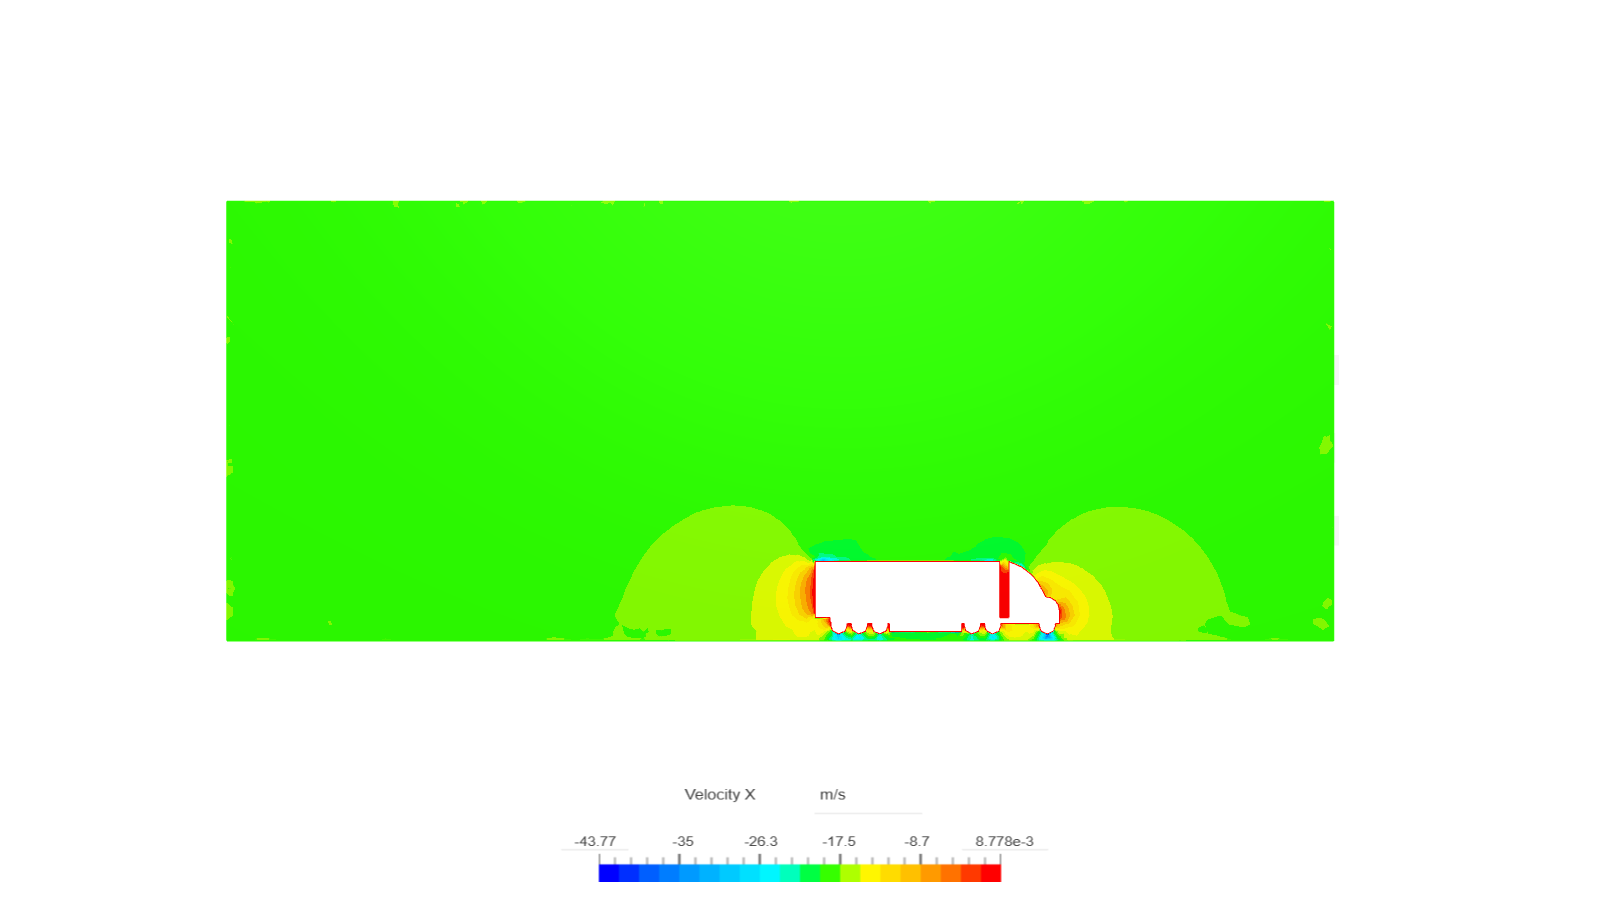 Simple Truck simulation image